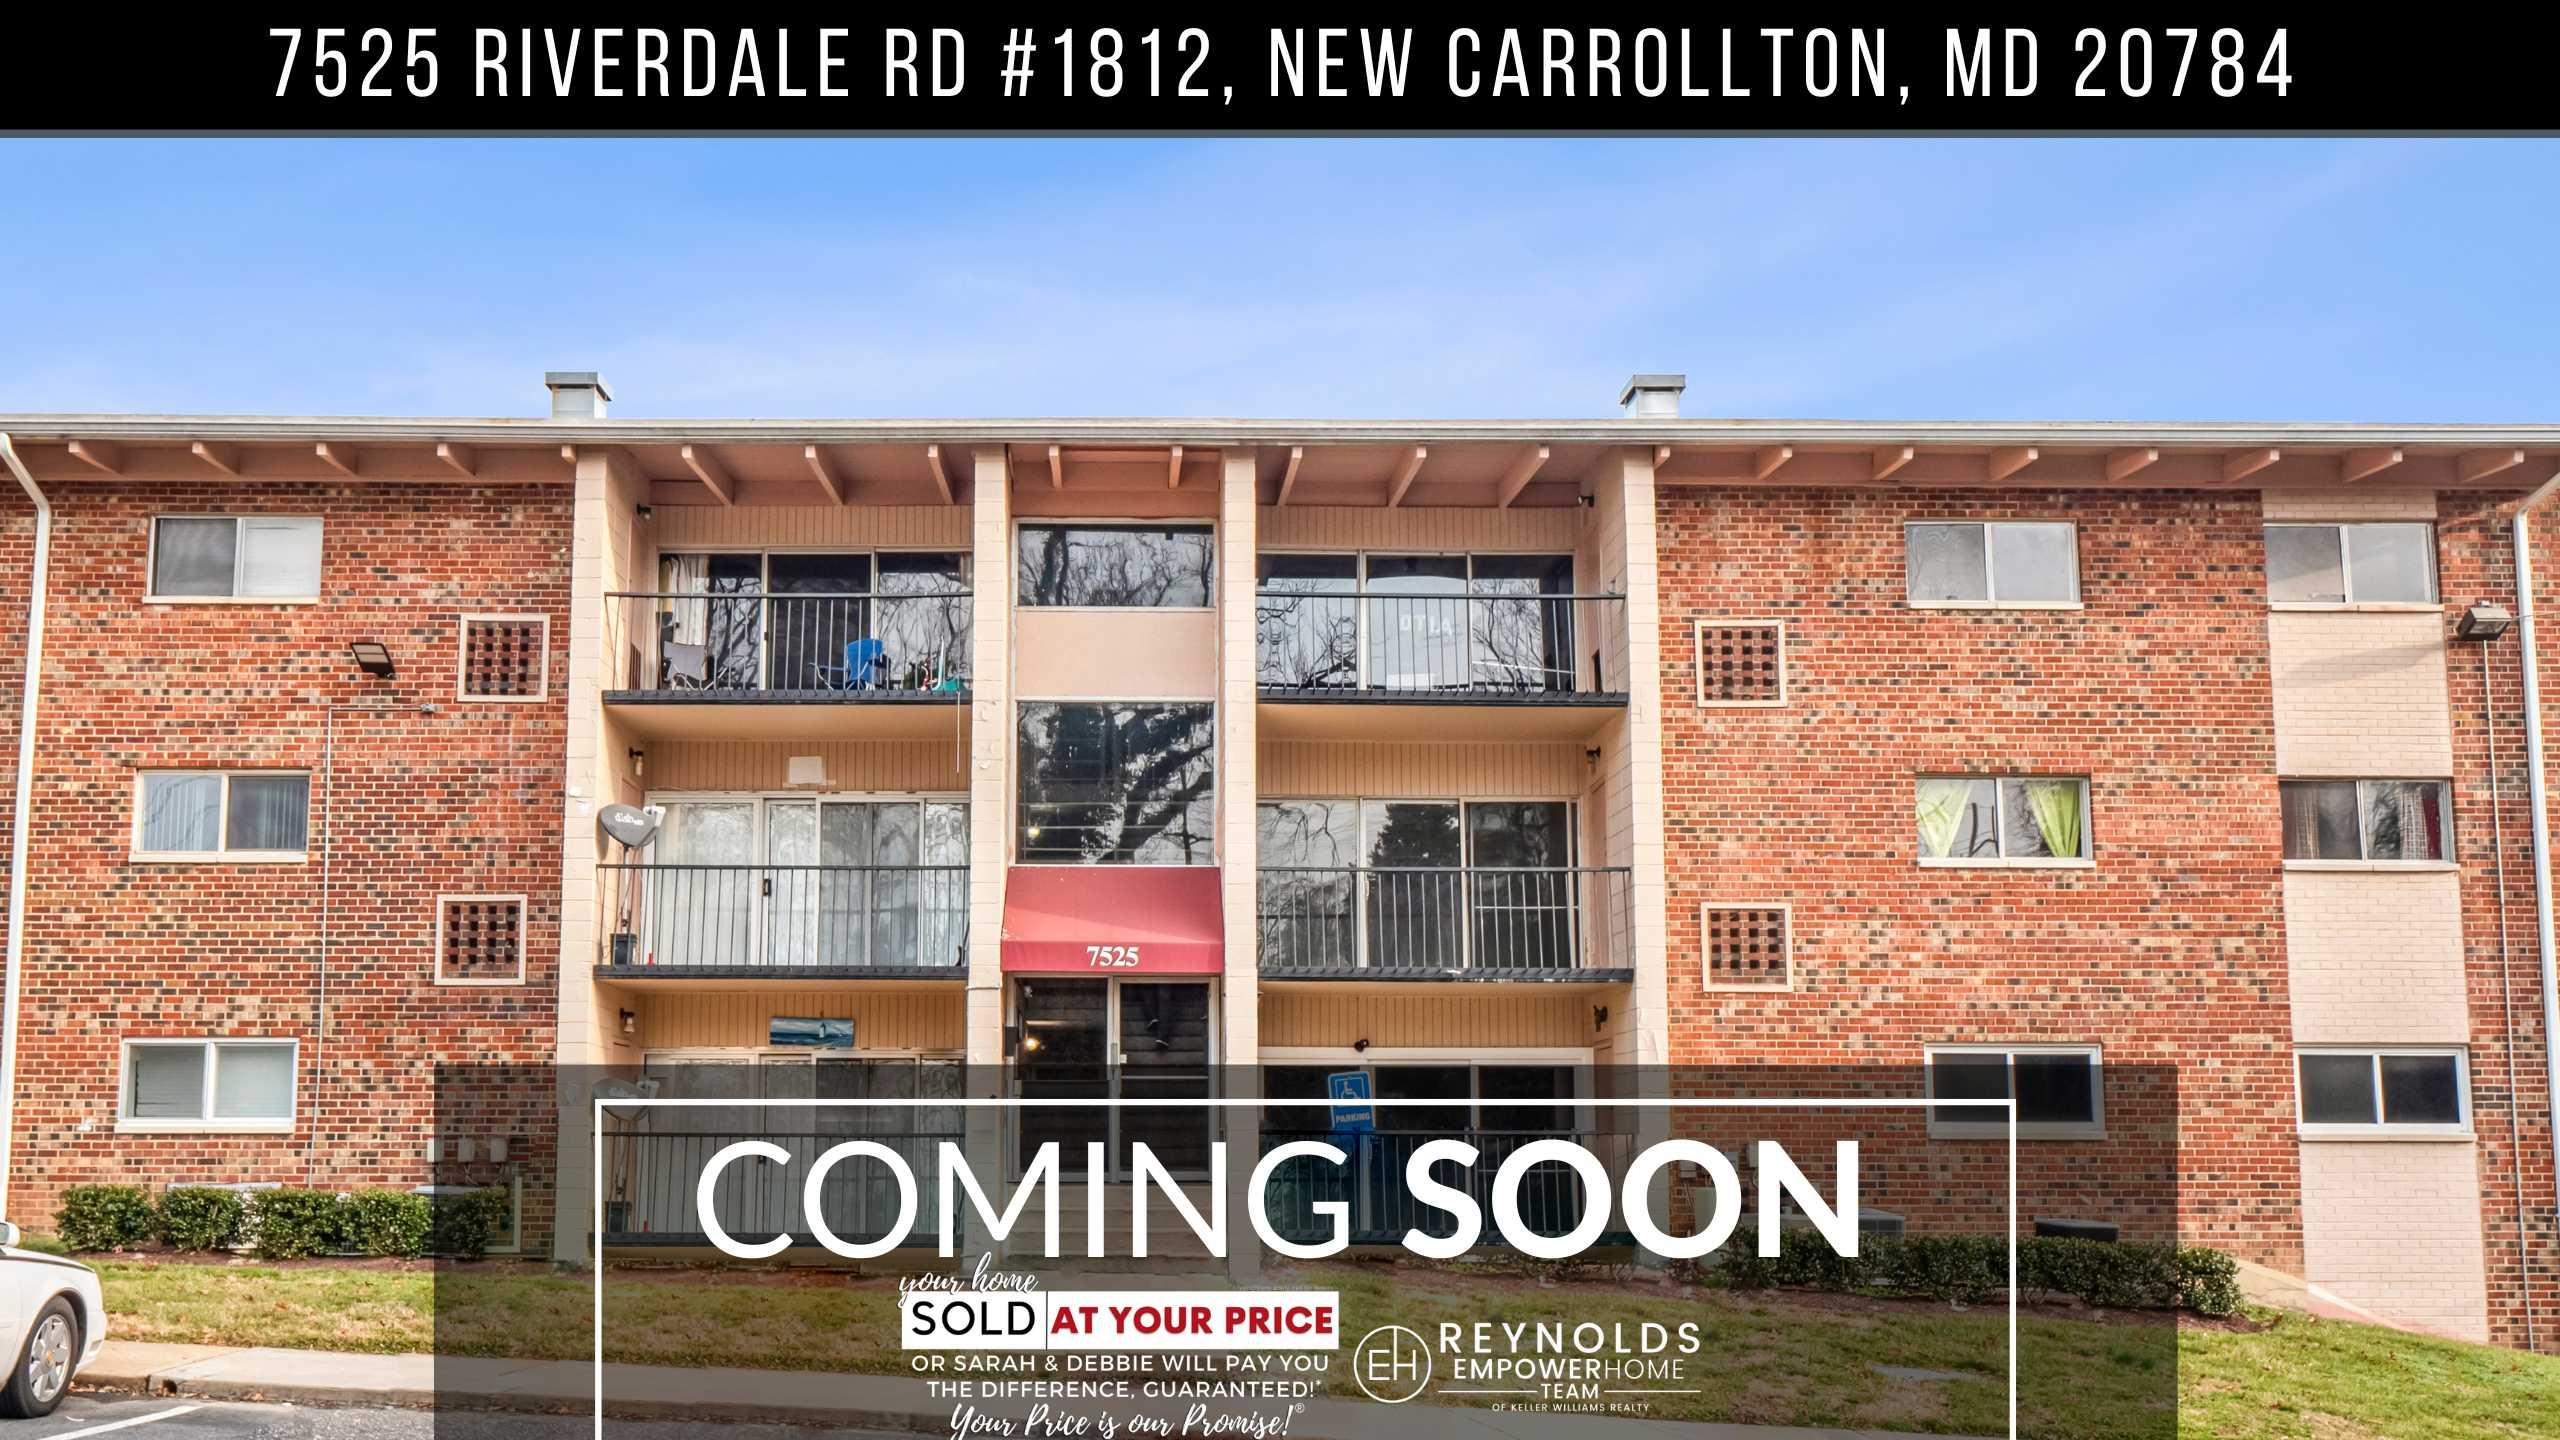 7525 Riverdale Rd #1812, New Carrollton, MD 20784